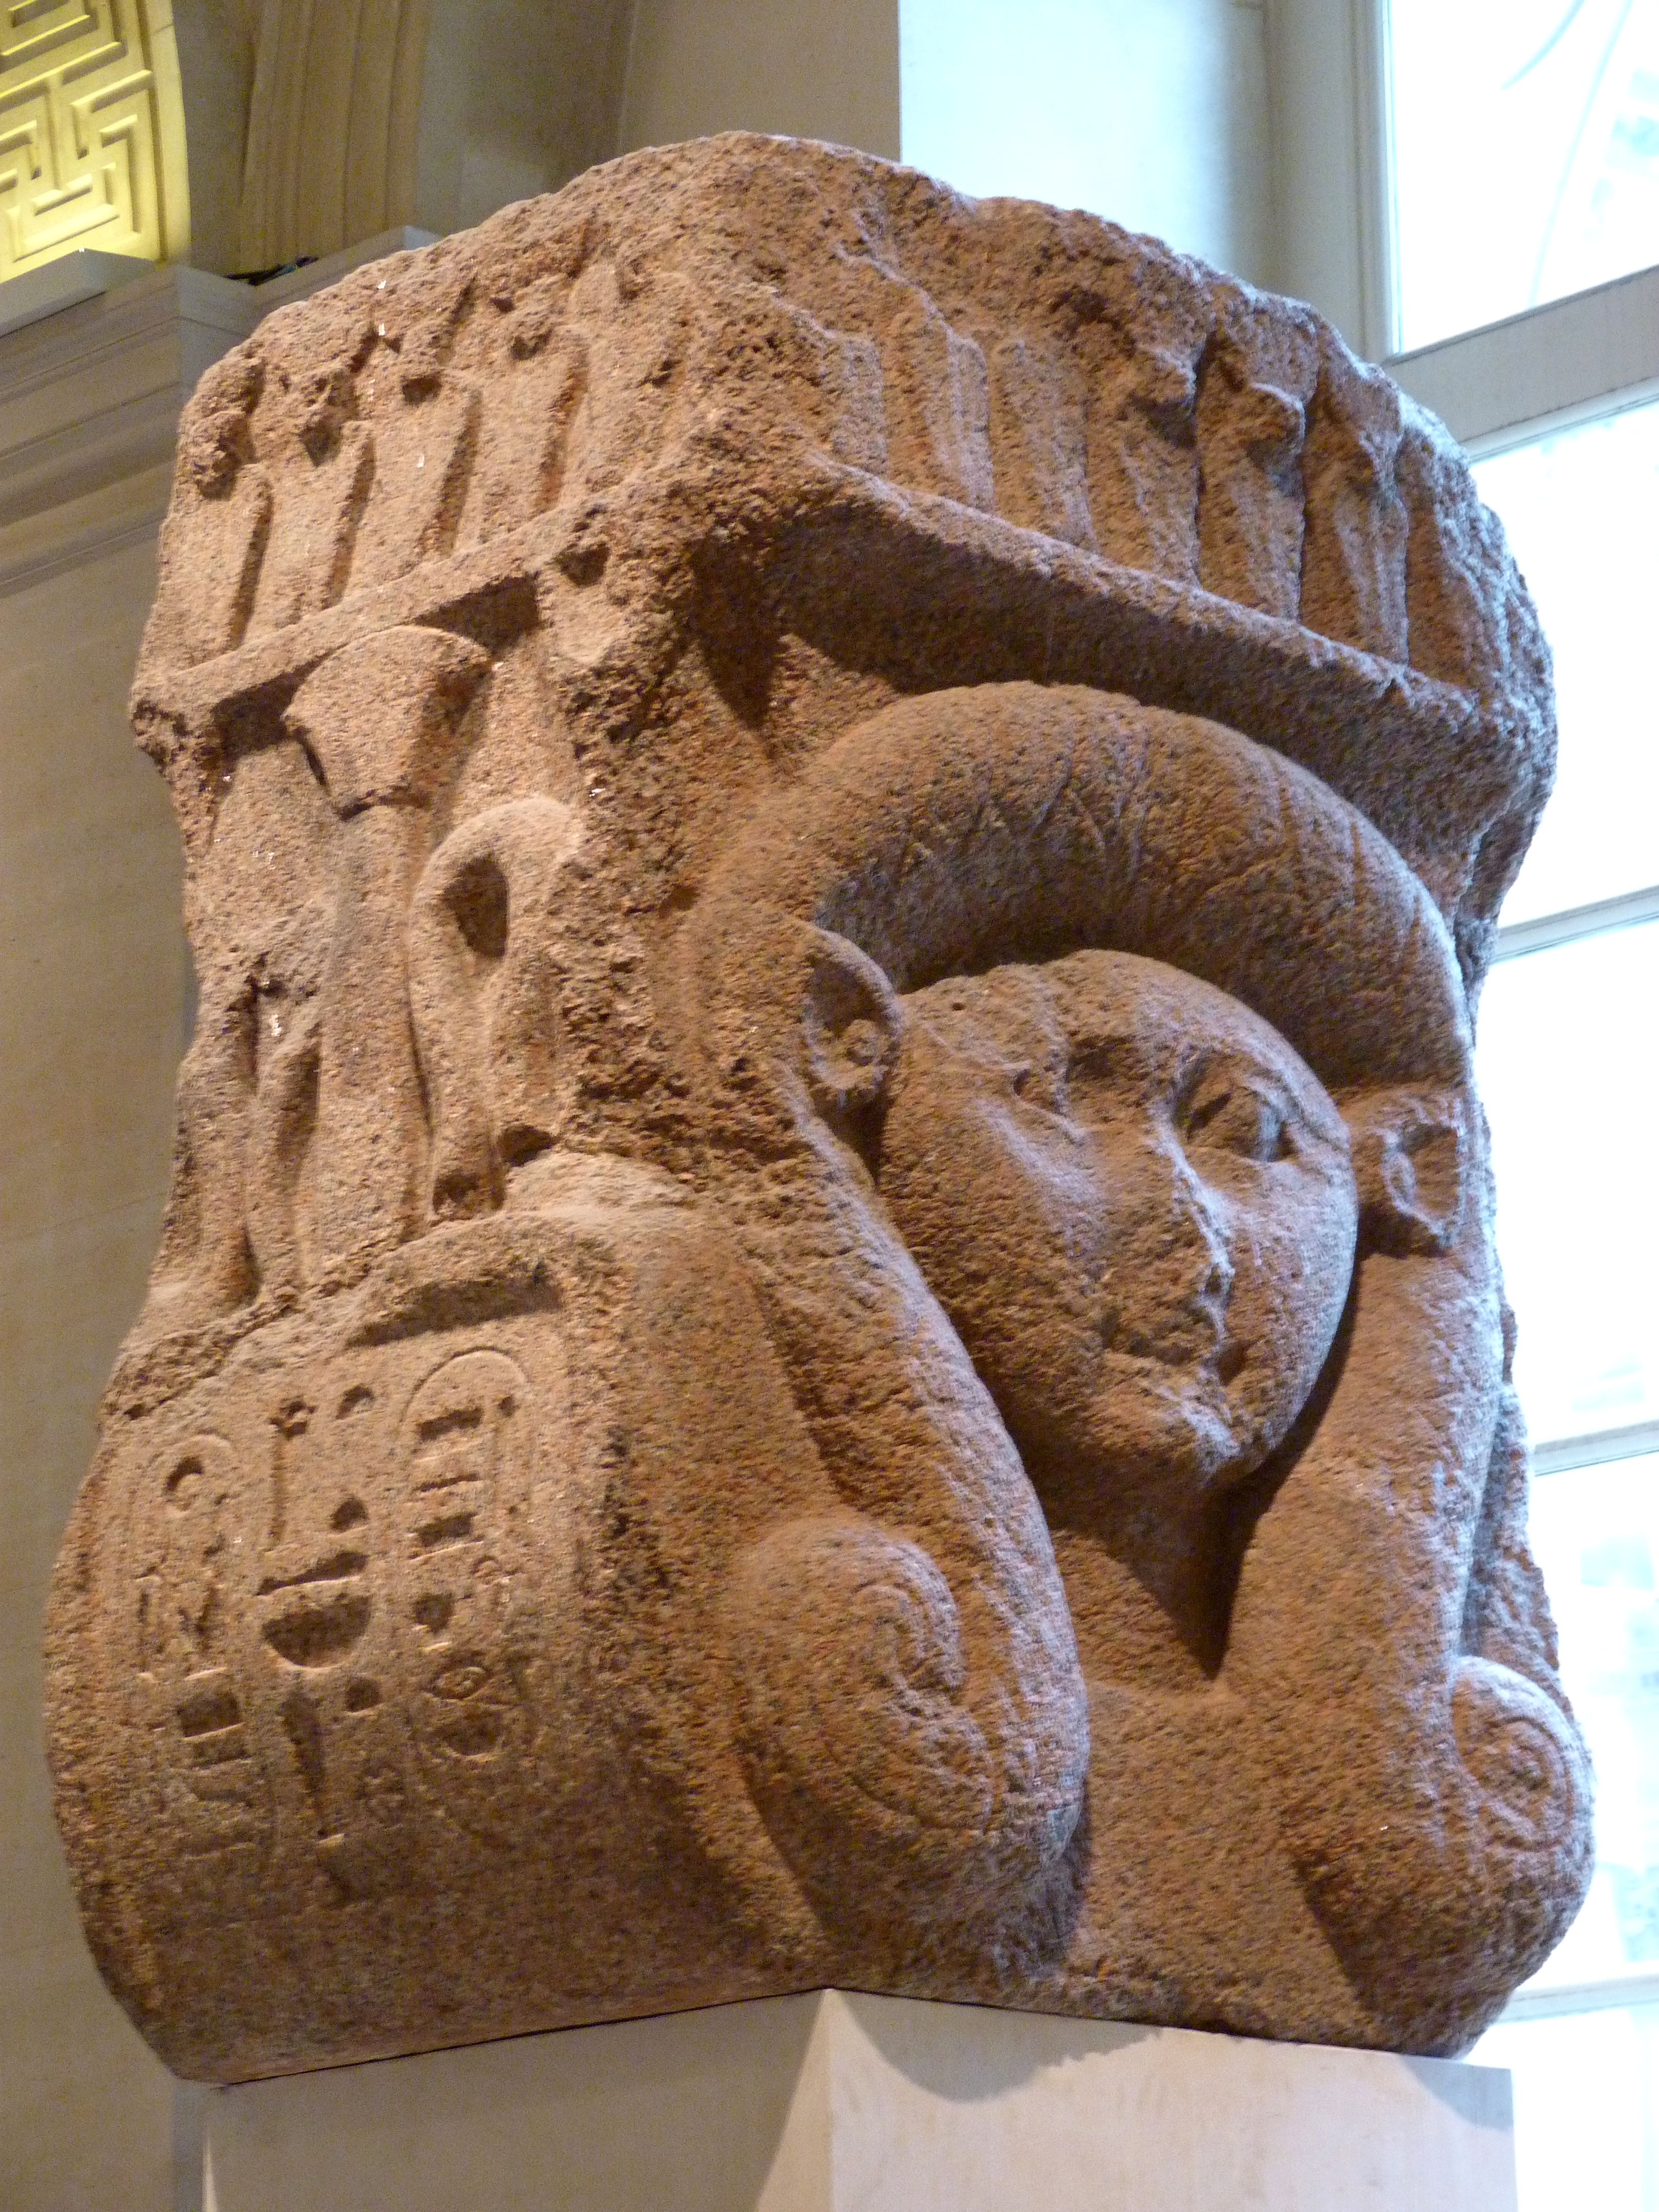 42 - Hathor the Egyptian goddess, Ninhursag the Mesopotamian goddess, her hair styled equals her Umbilical Chord Cutter symbol